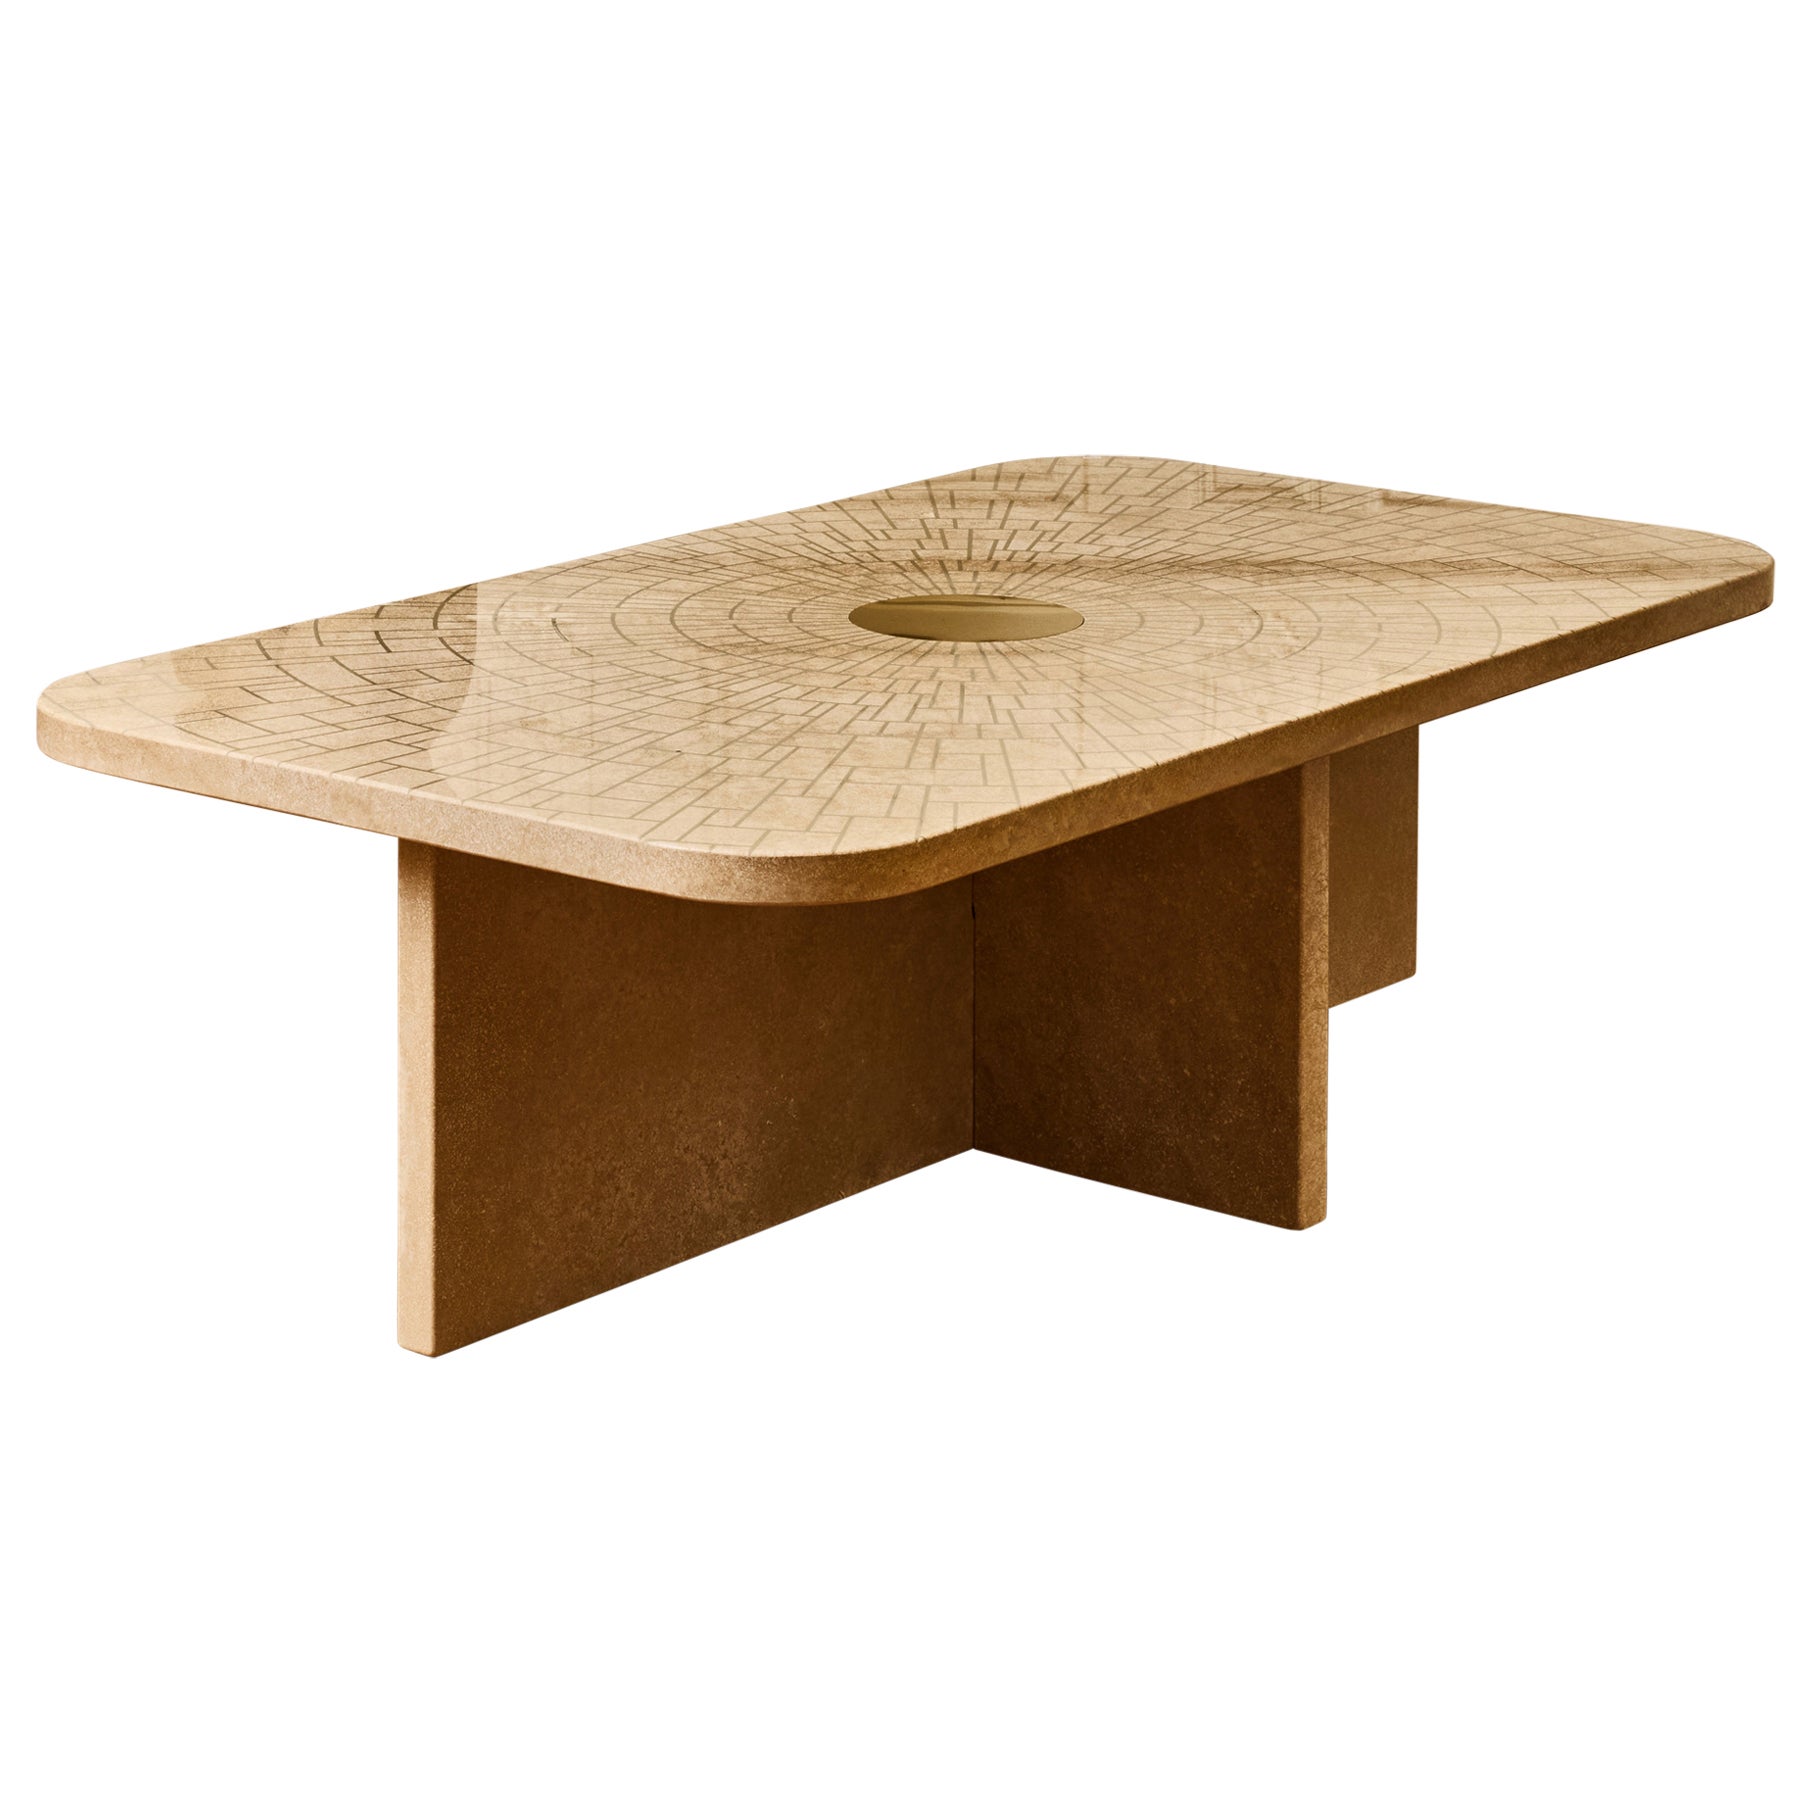 Travertine stone coffee table by Studio Glustin For Sale